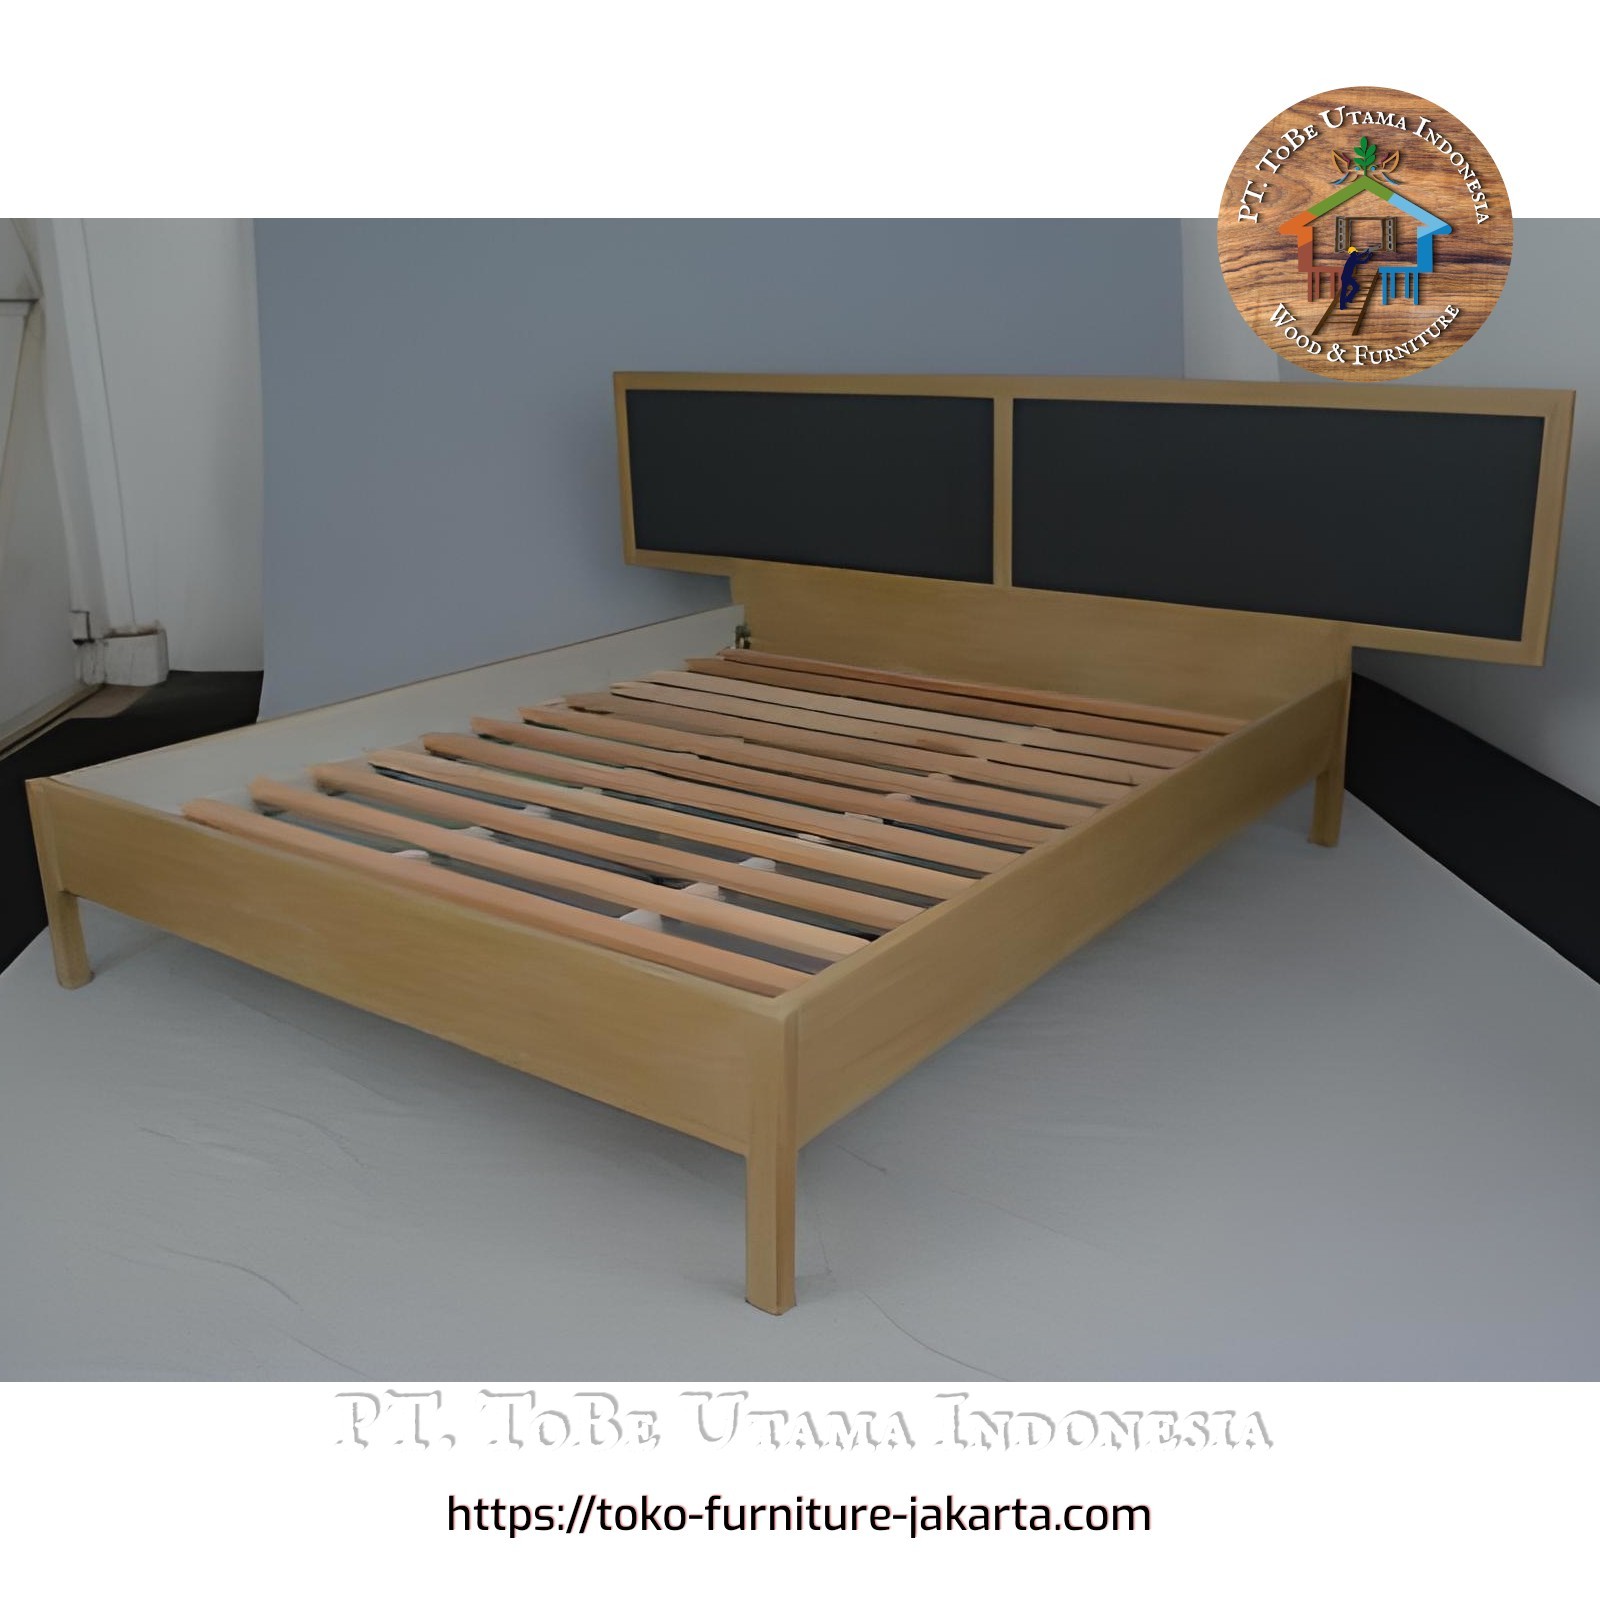 Bedroom: Bed Frame Minimalist made of solid wood, sponge, fabric (image 1 of 1).